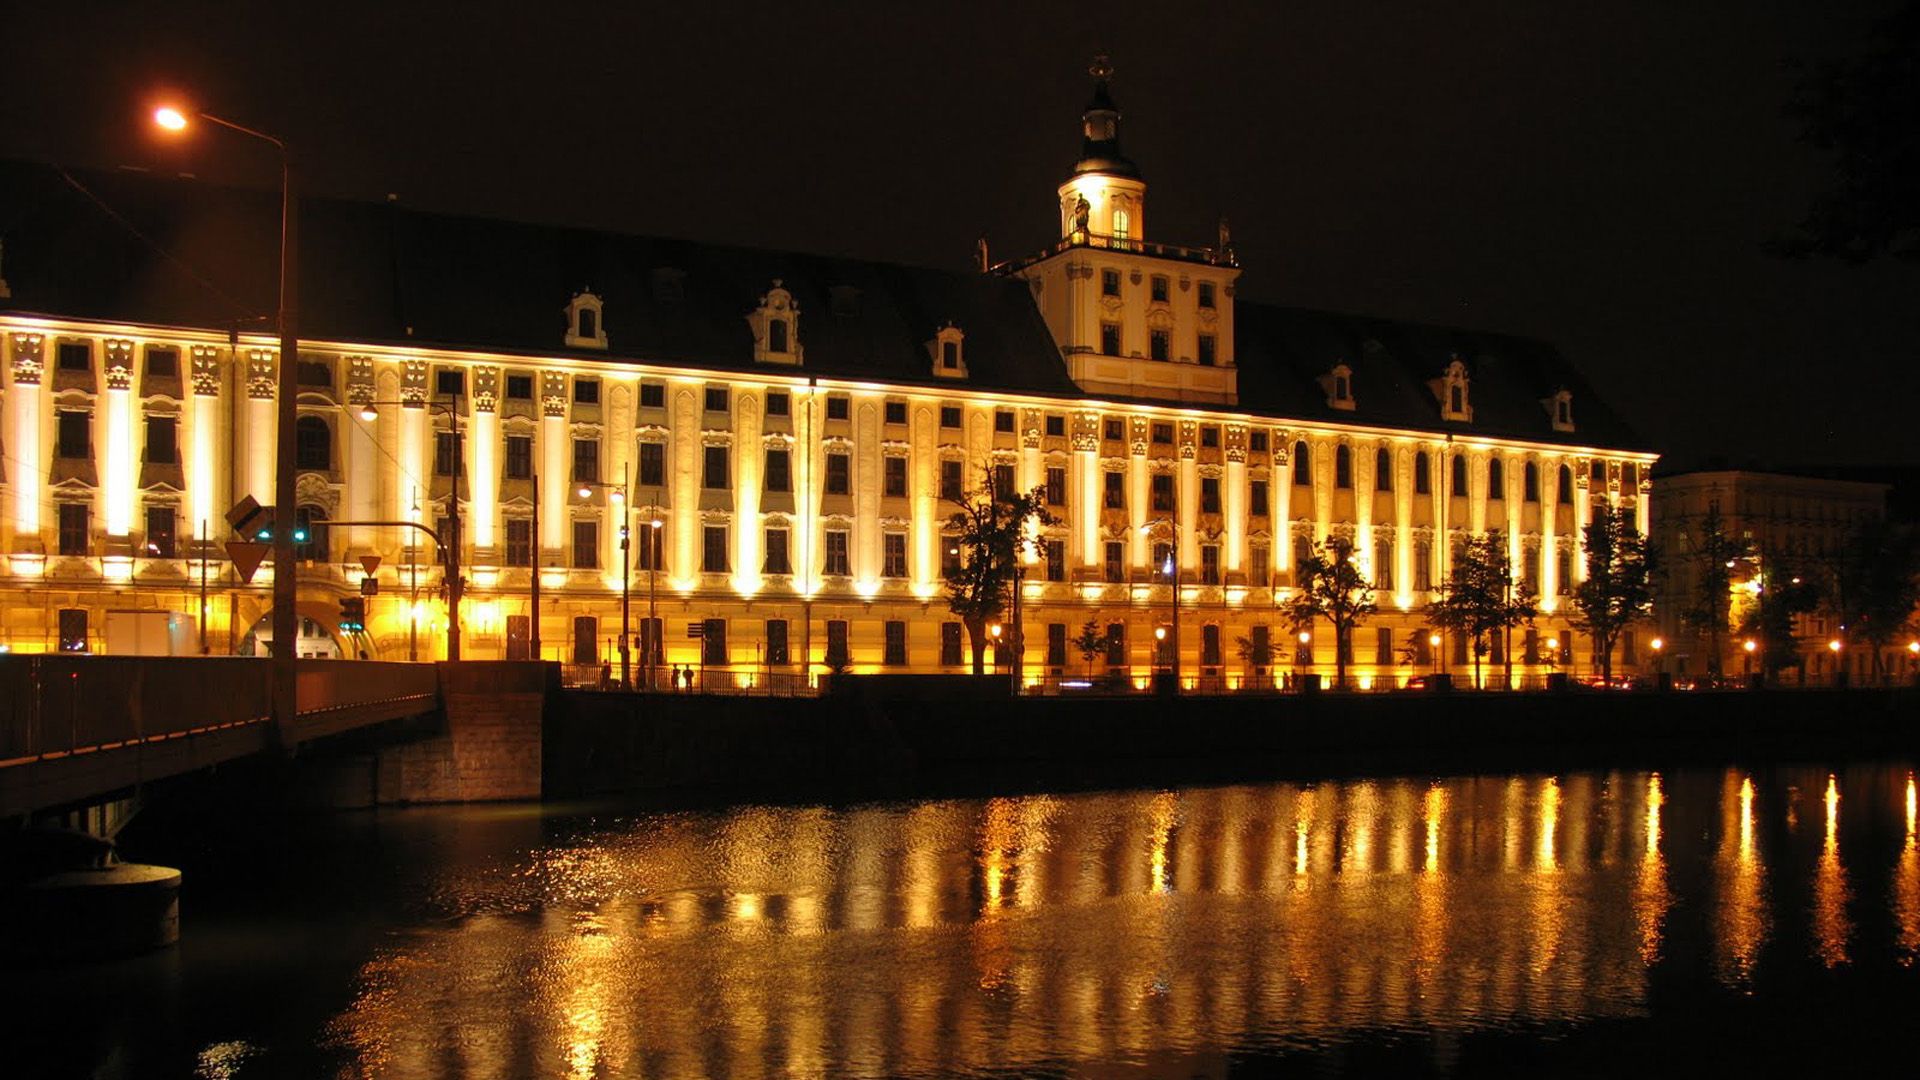 University main building, at night